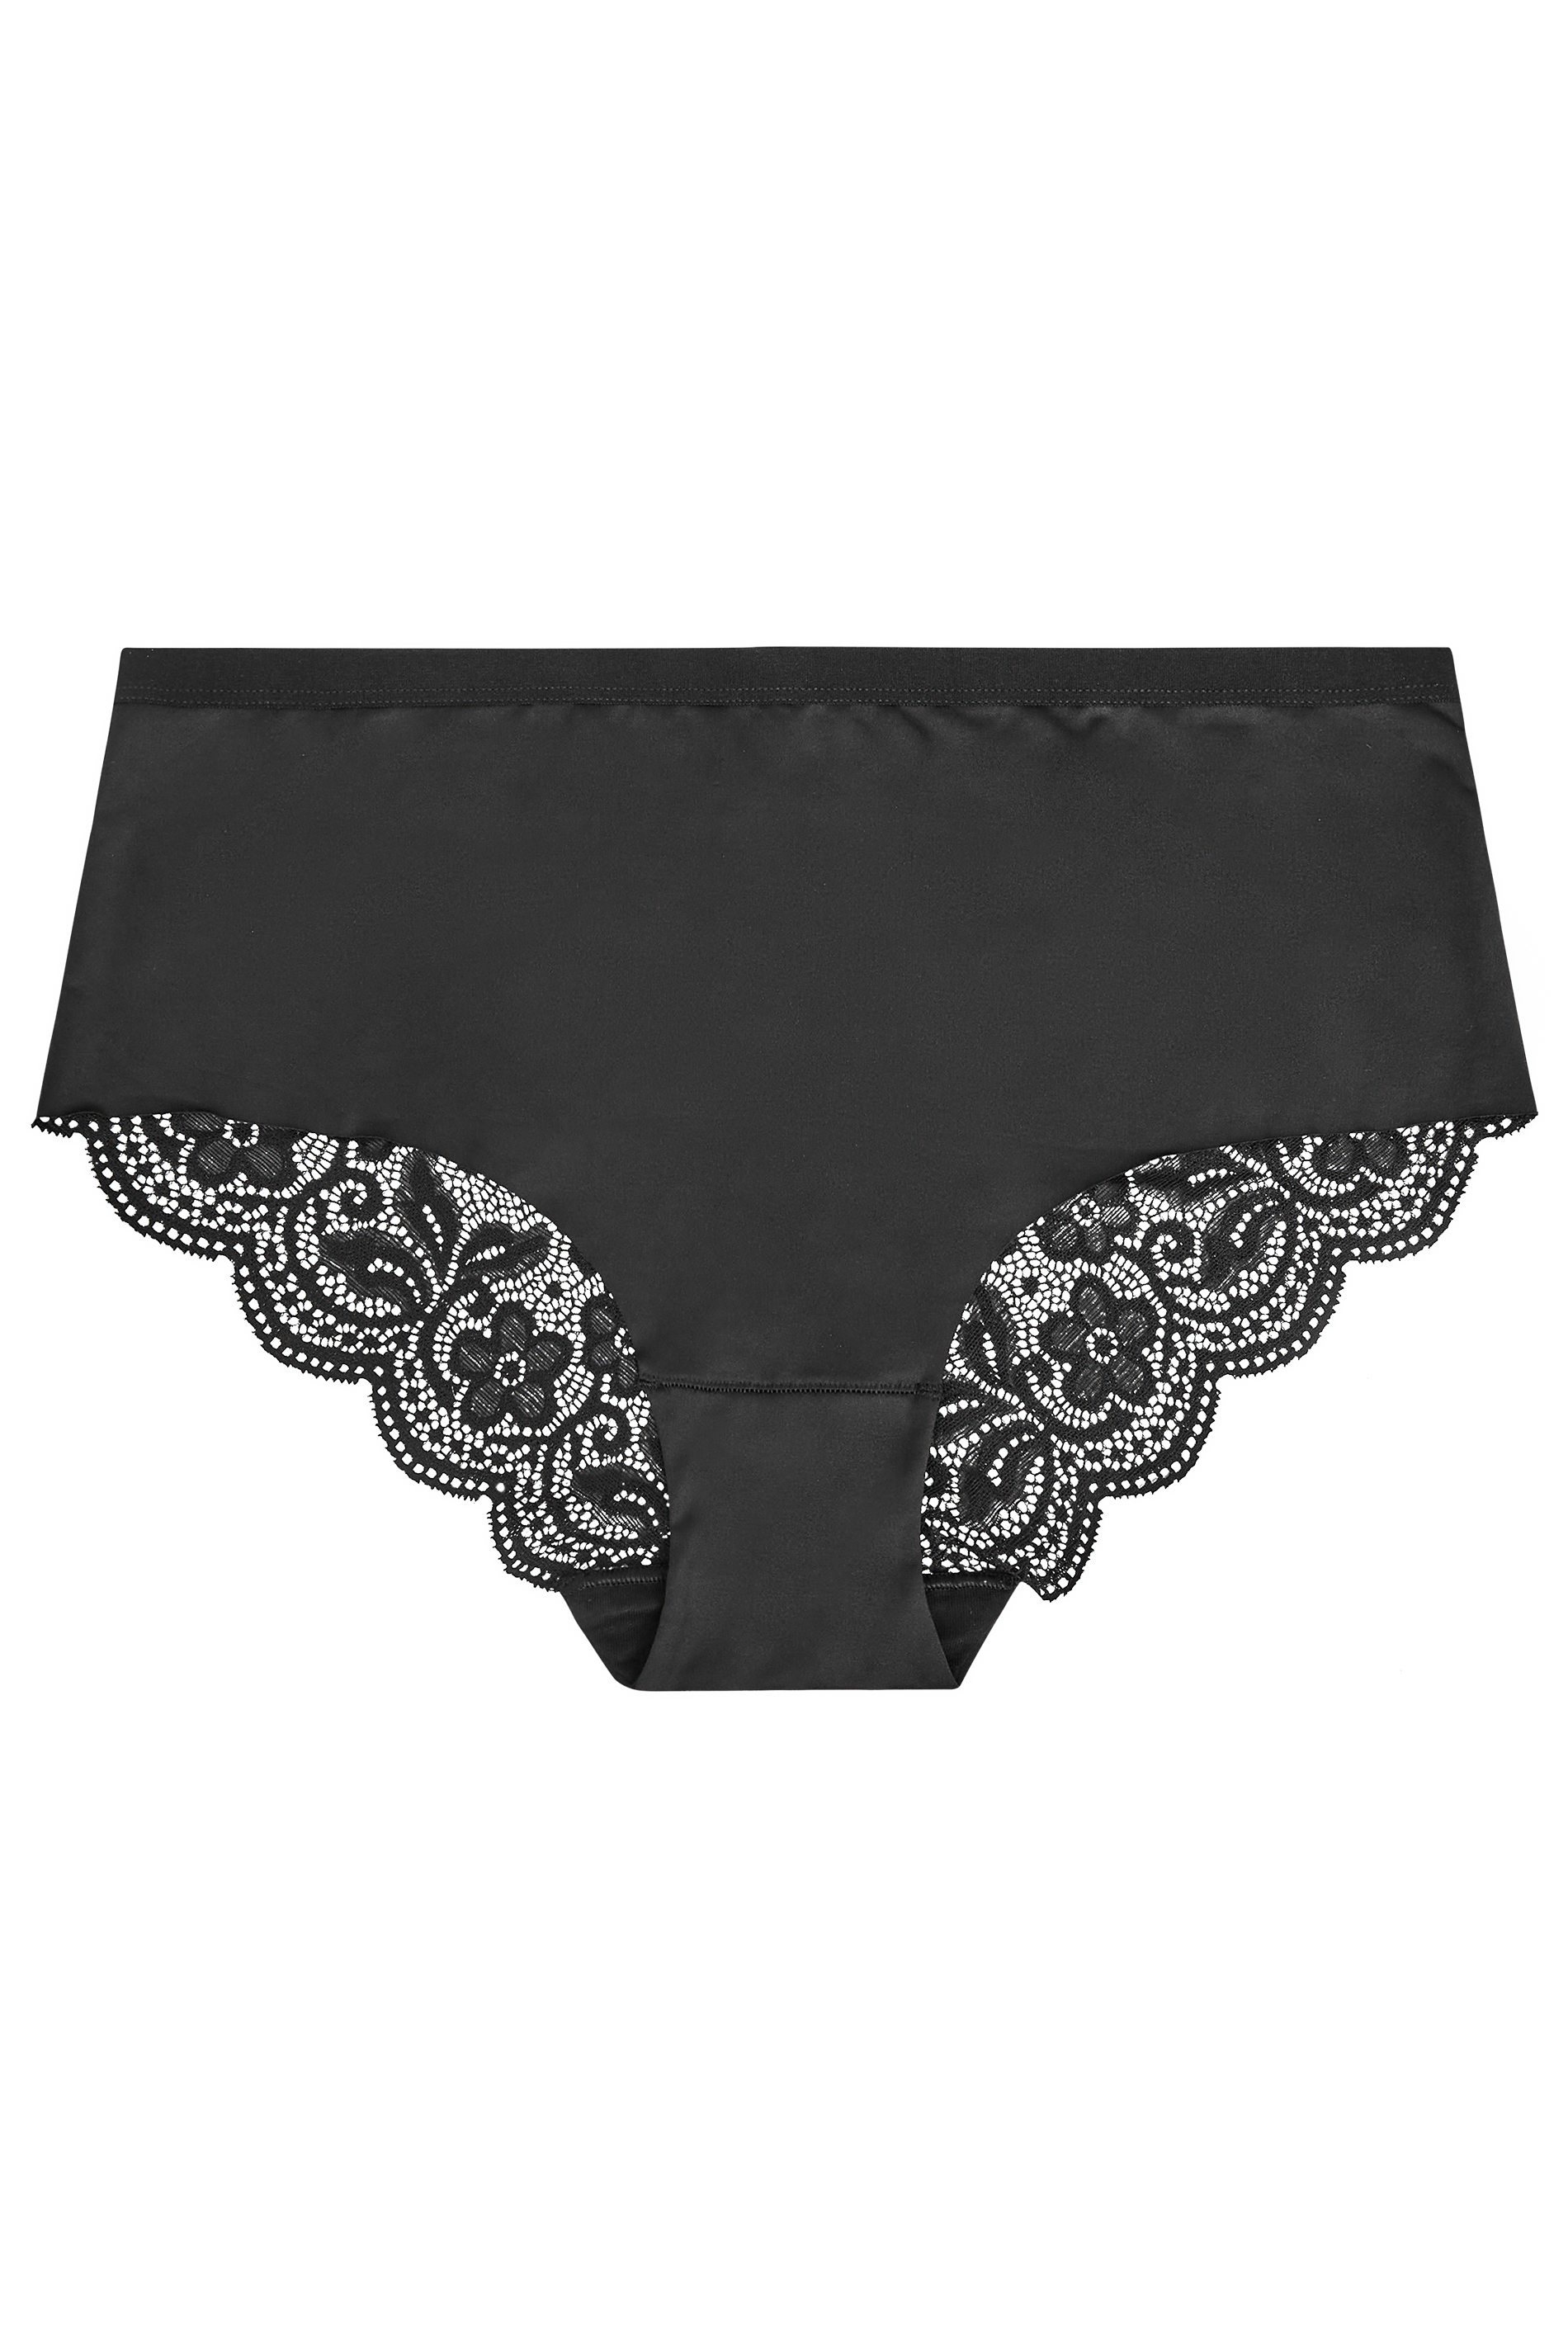 Black Lace Underwear 